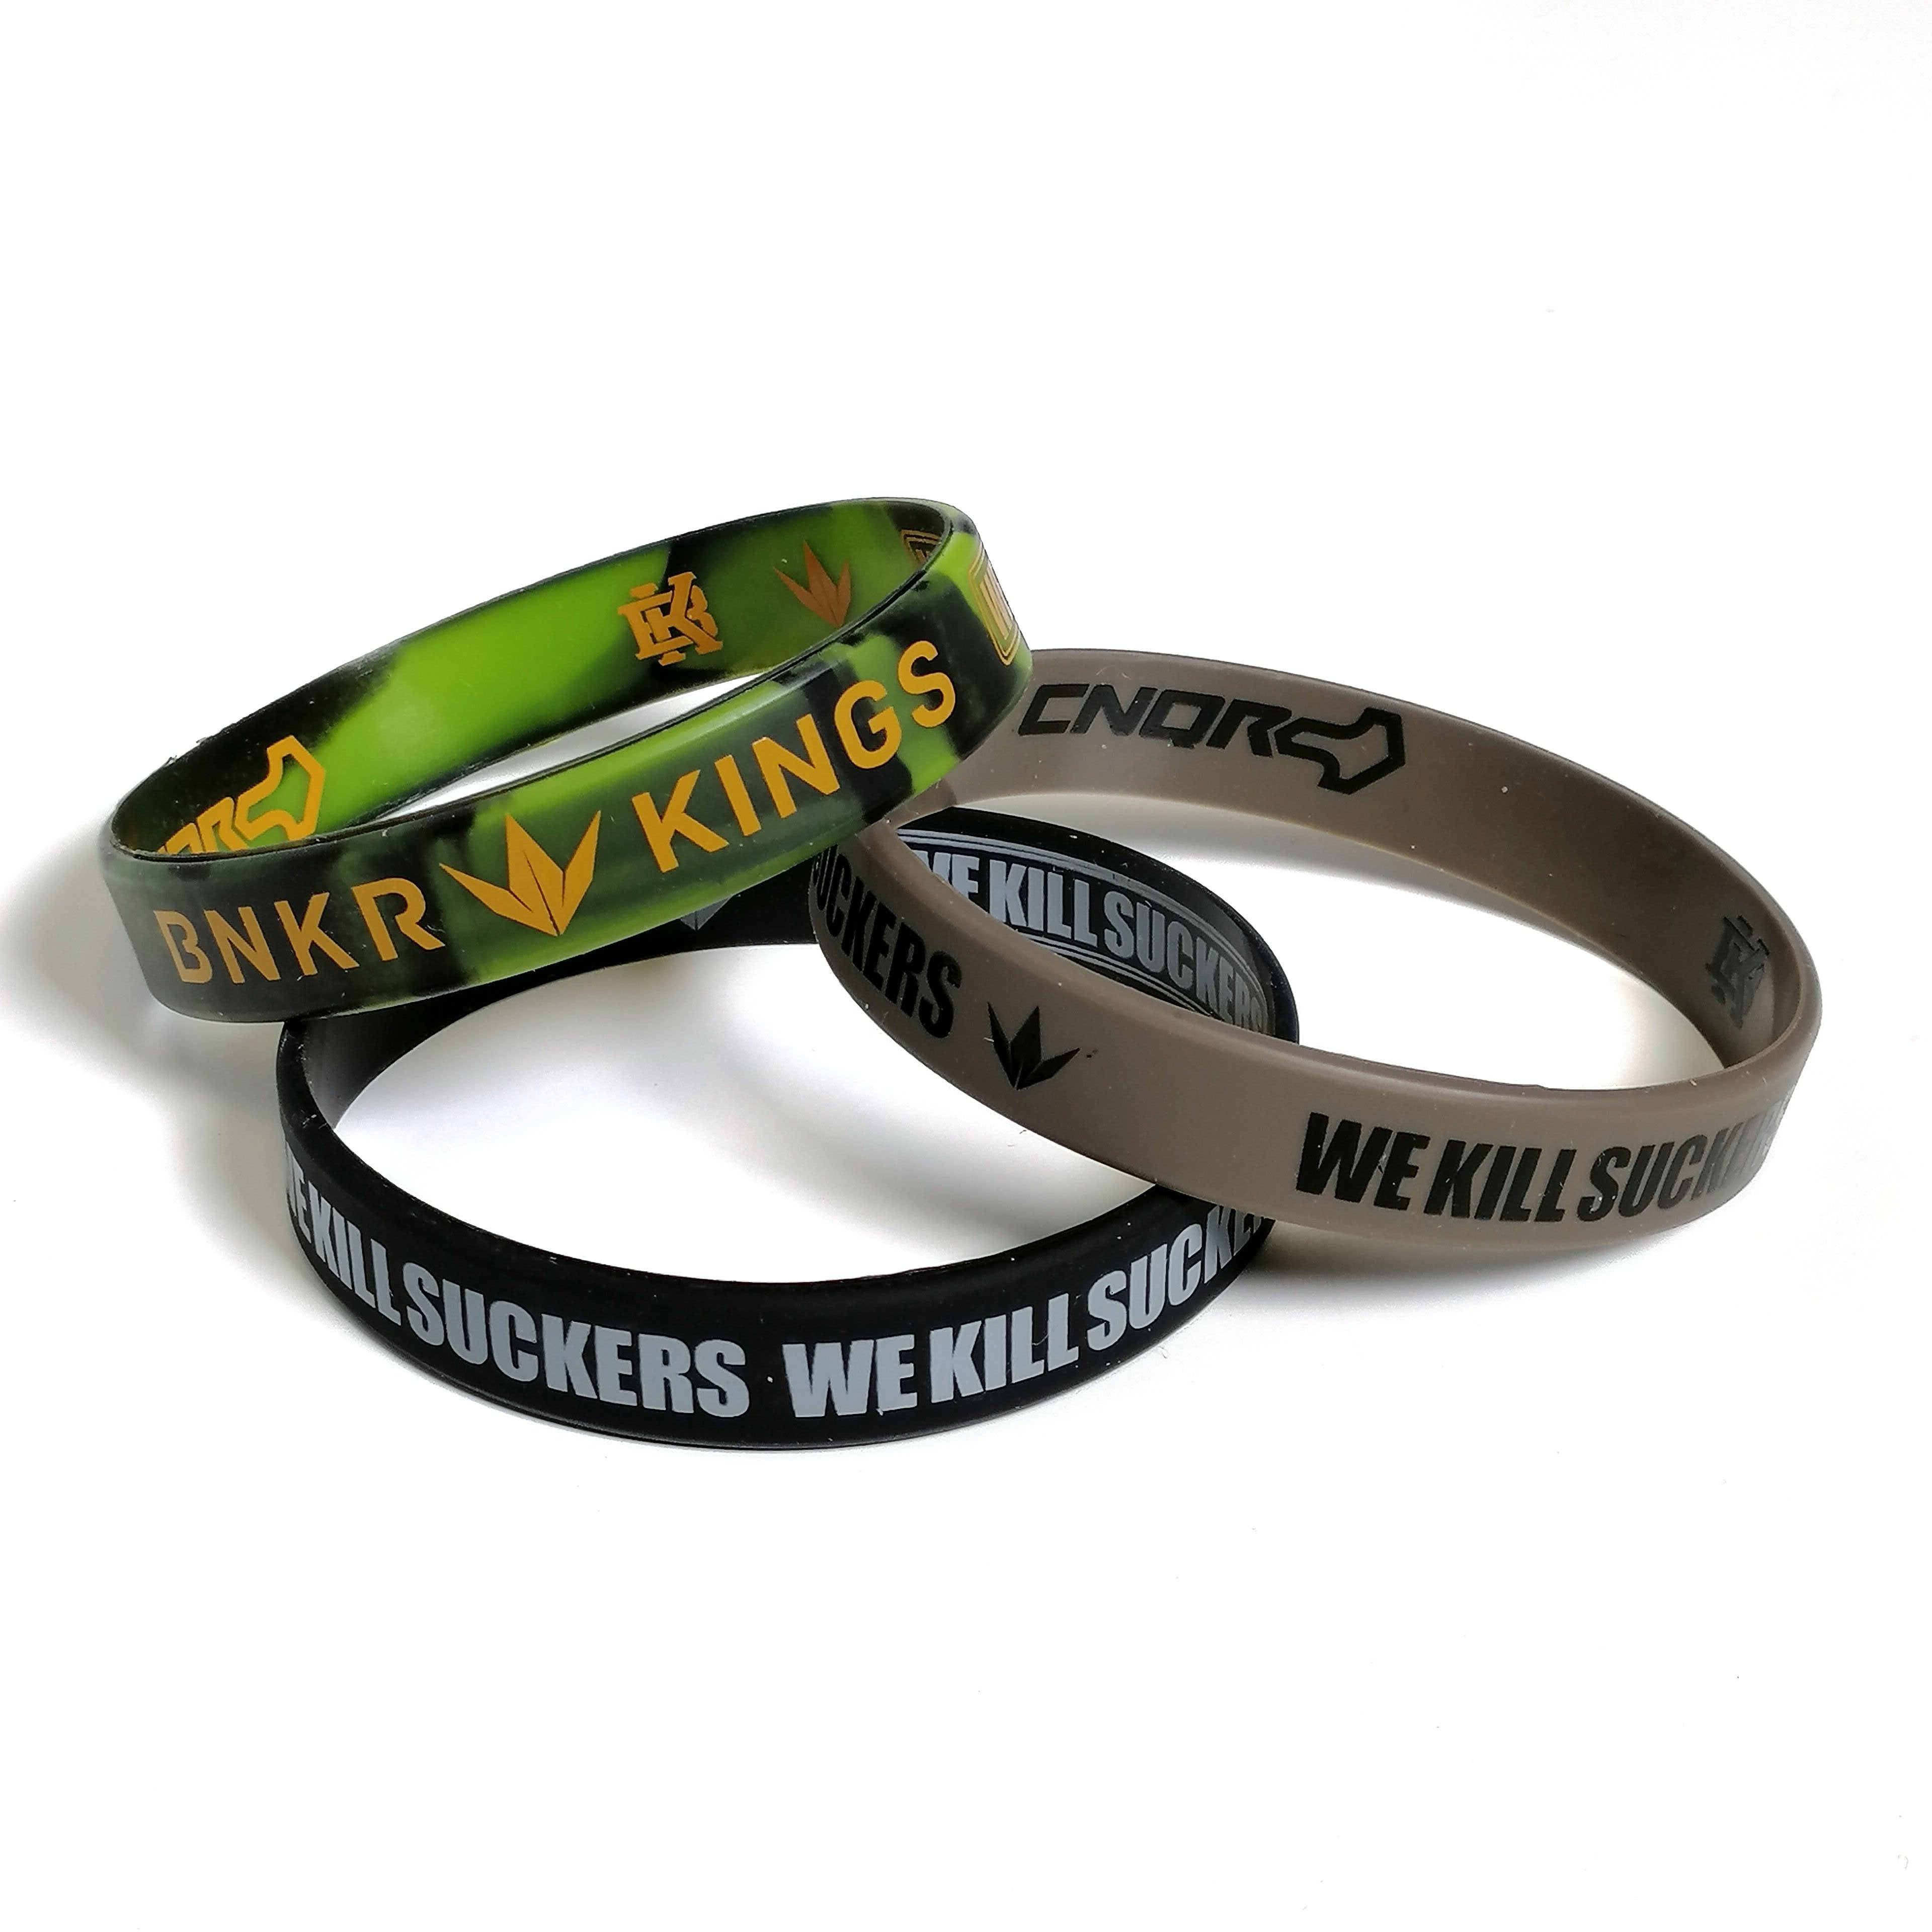 Bunkerkings Wristbands (3-Pack) - Black/Tan/Olive